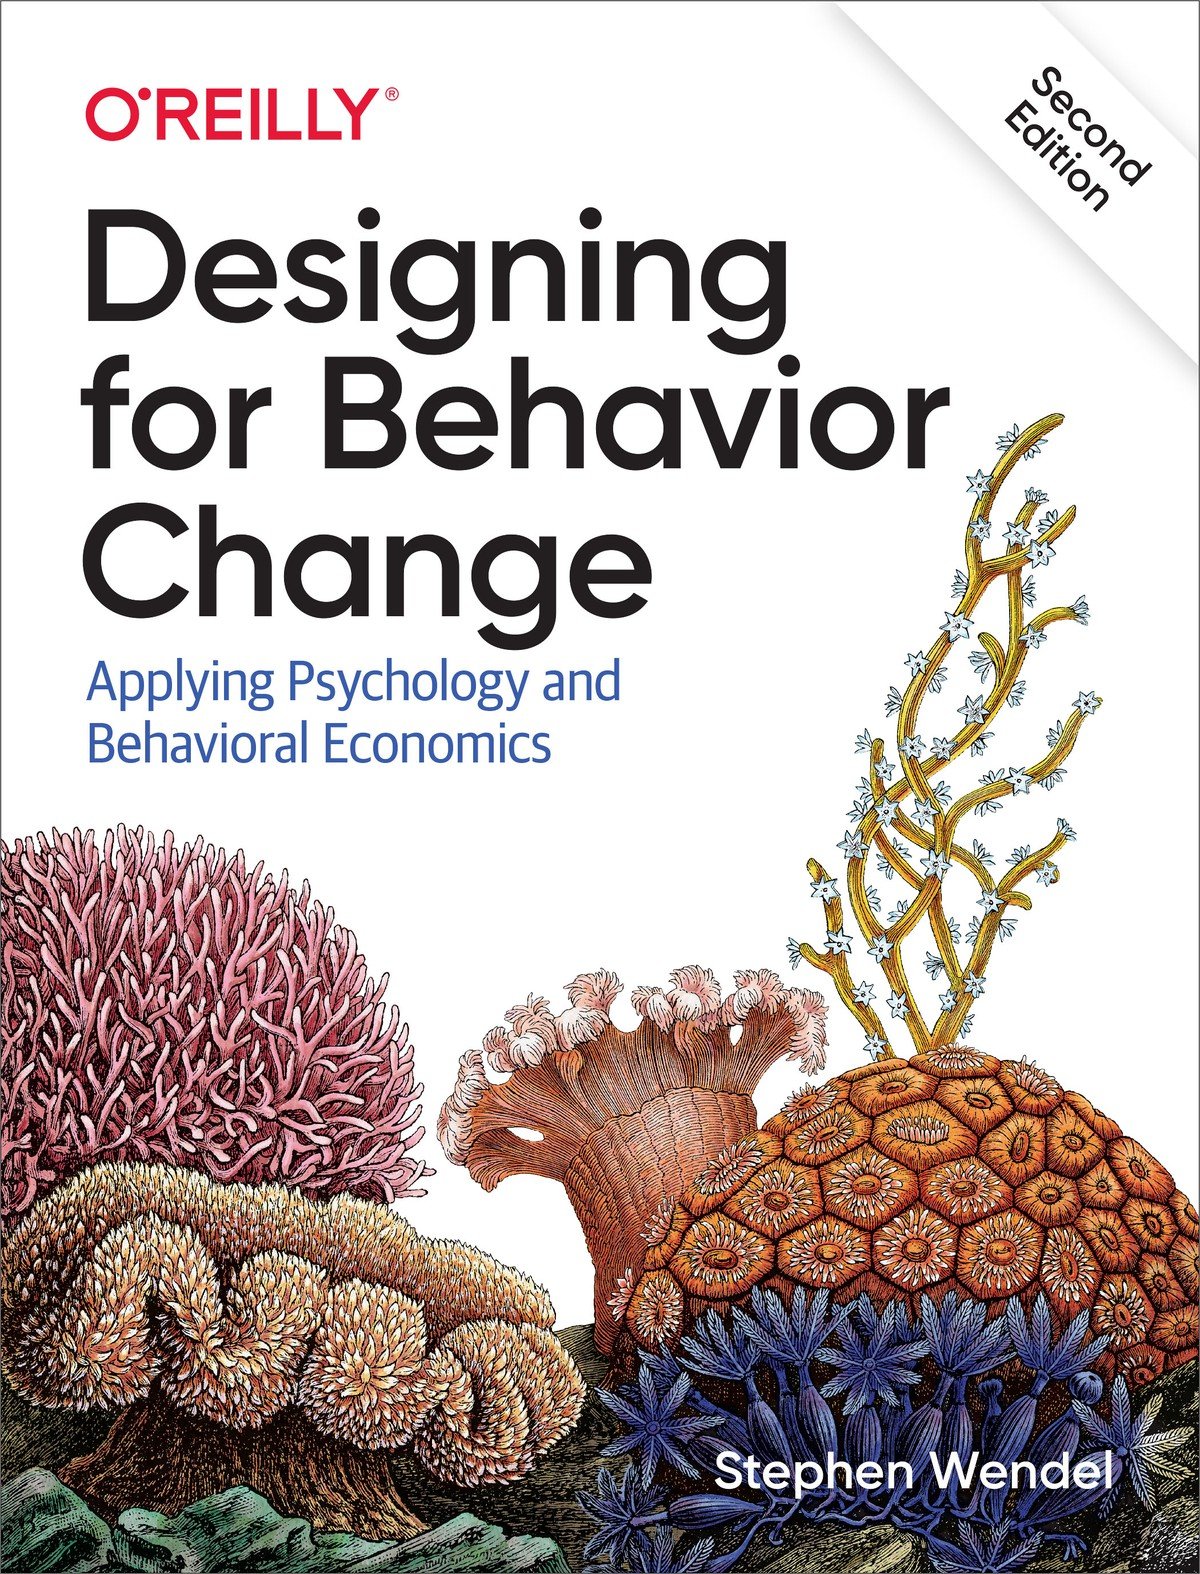 behavioral economics literature review